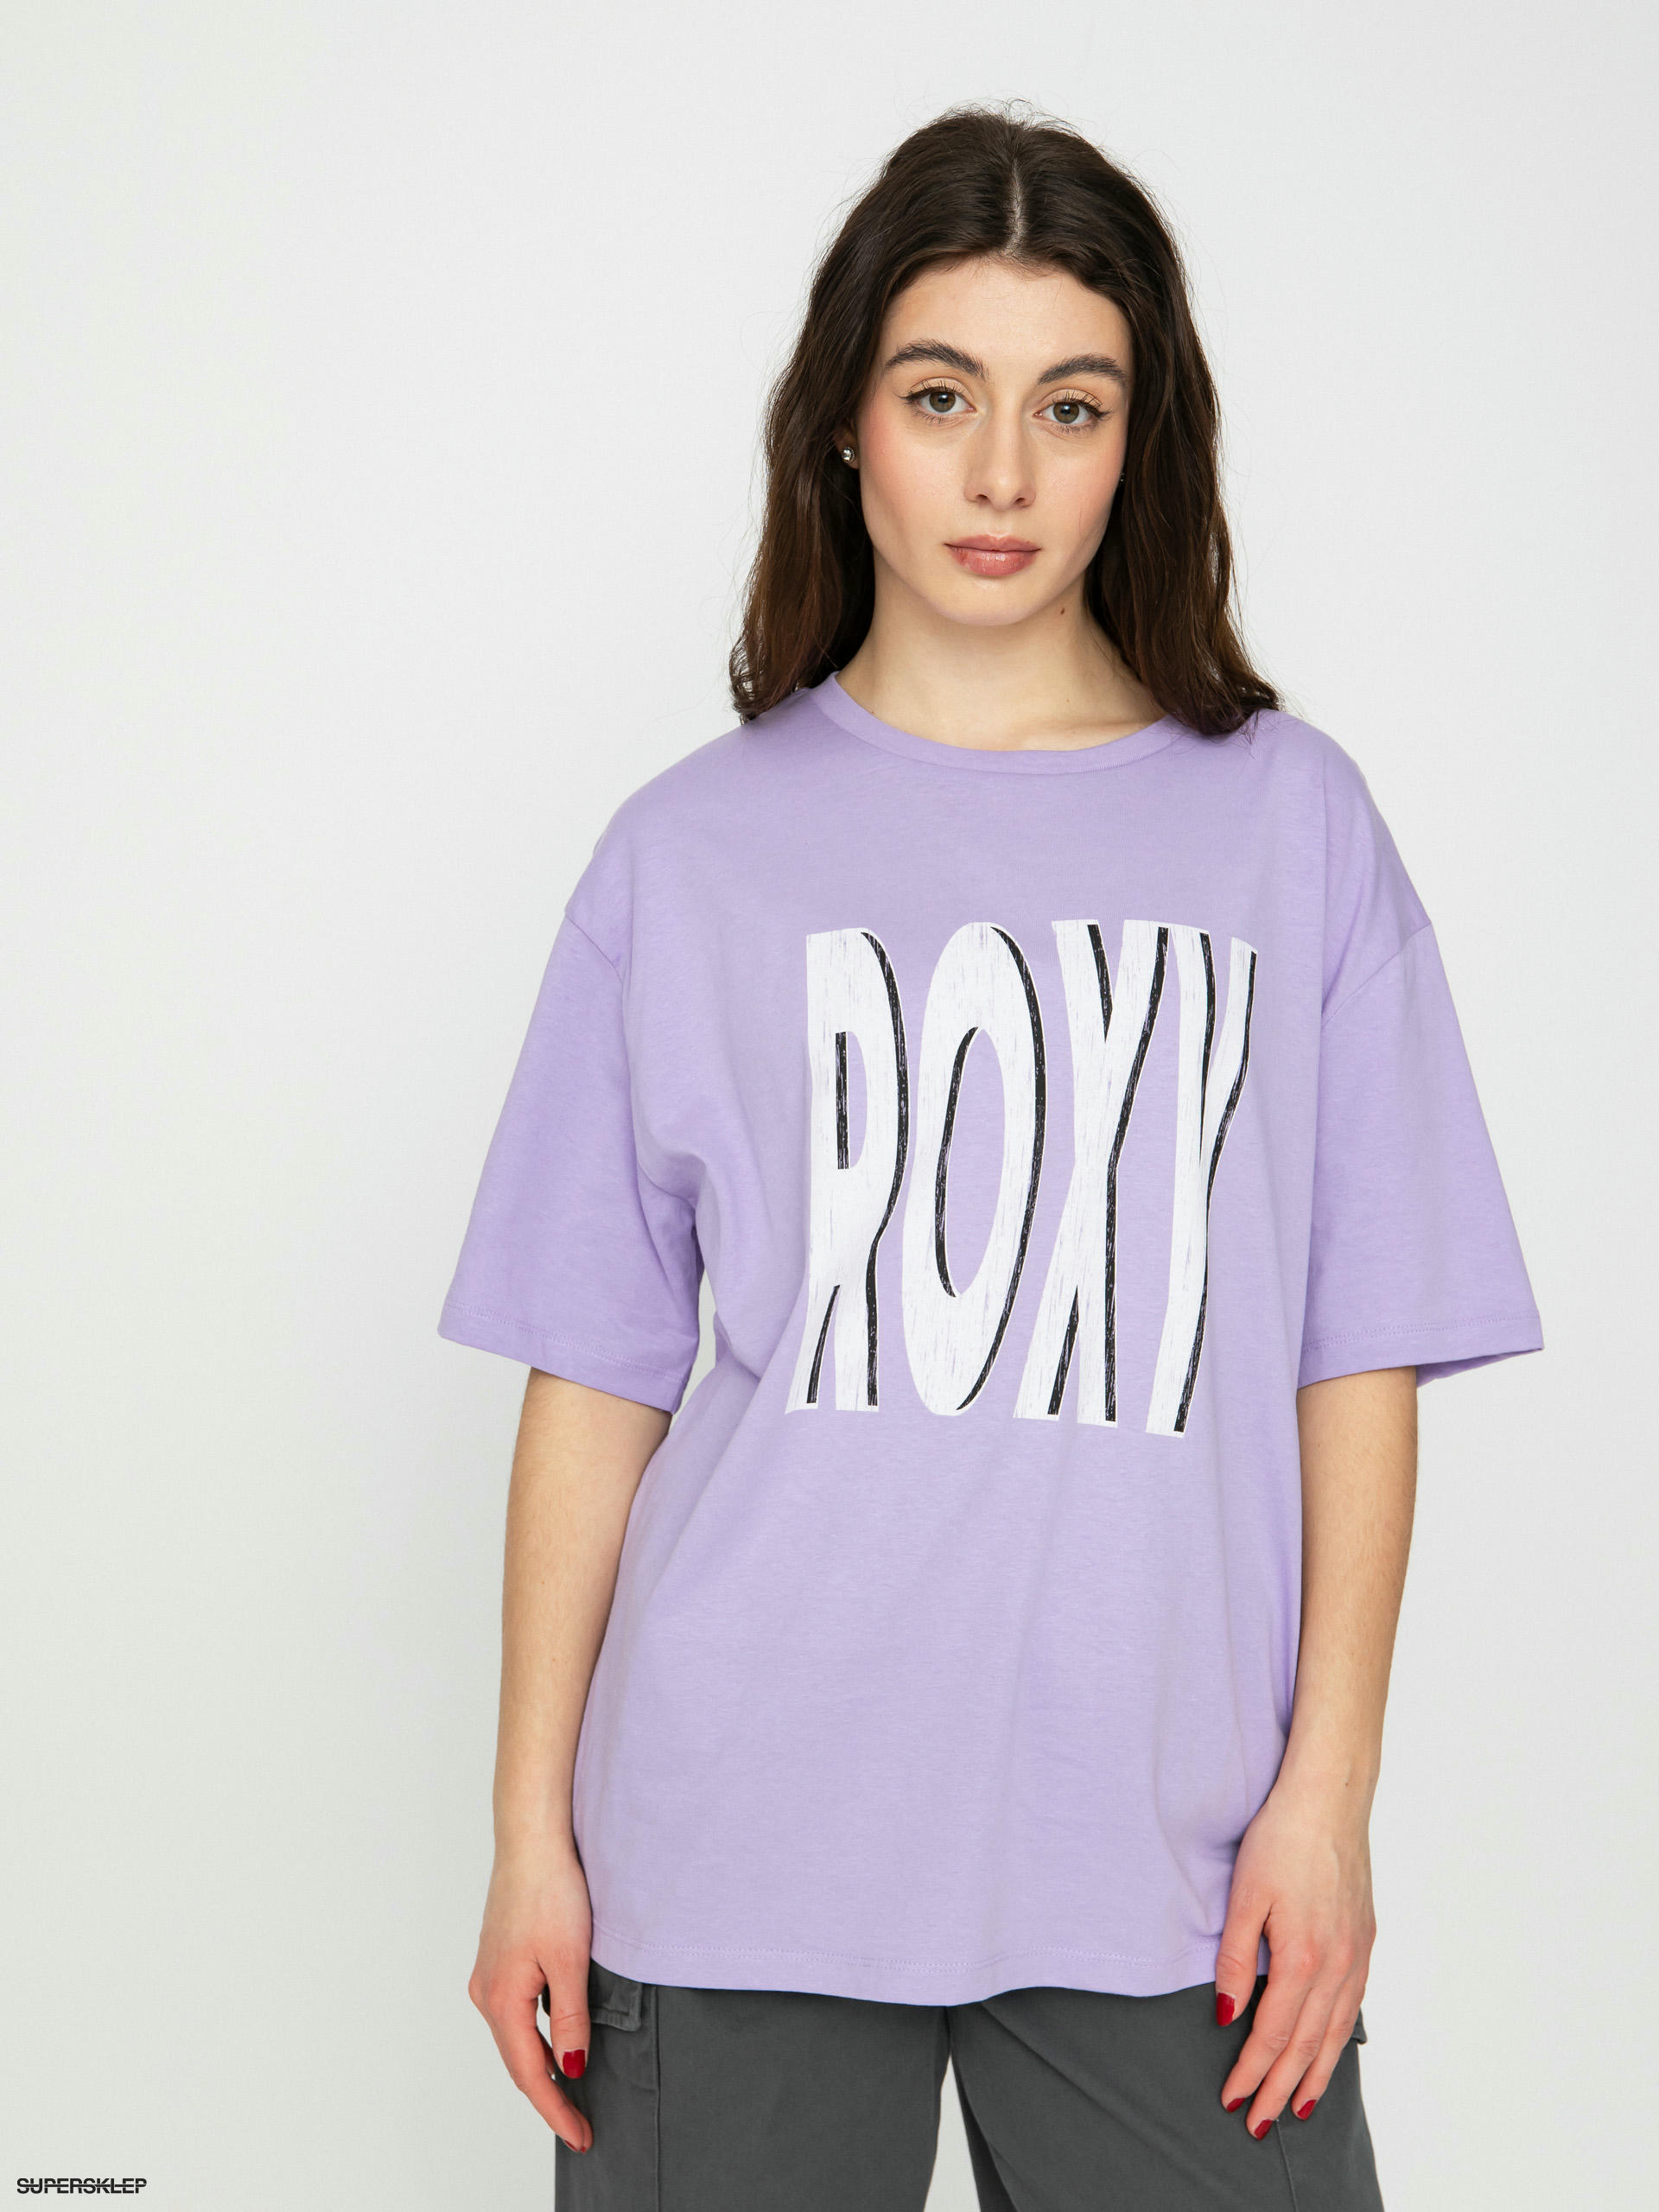 Sky (purple Sand Under T-shirt Roxy Wmn The rose)